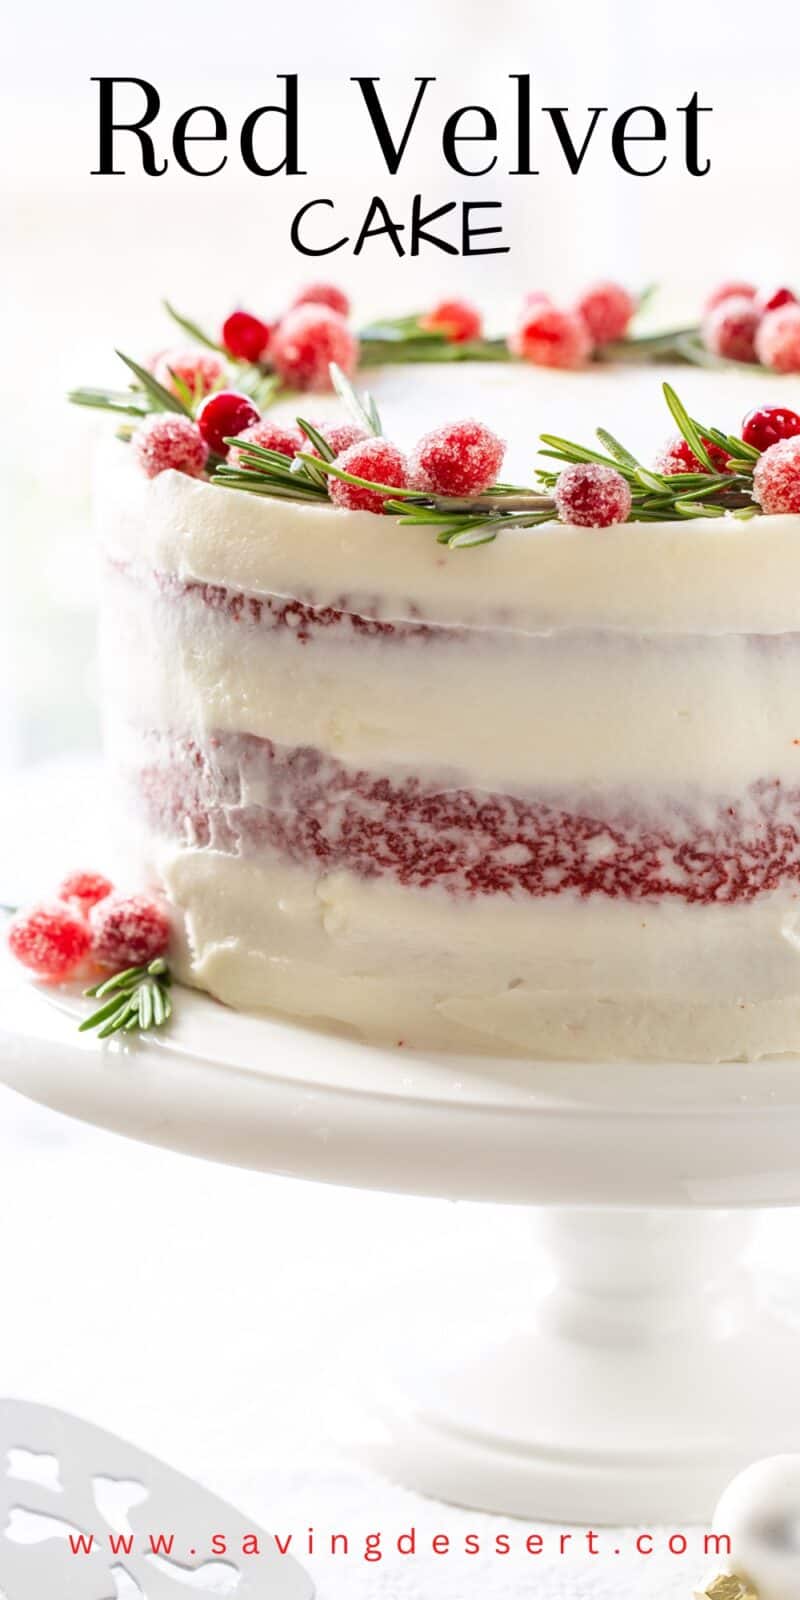 Side view of a Red Velvet Cake